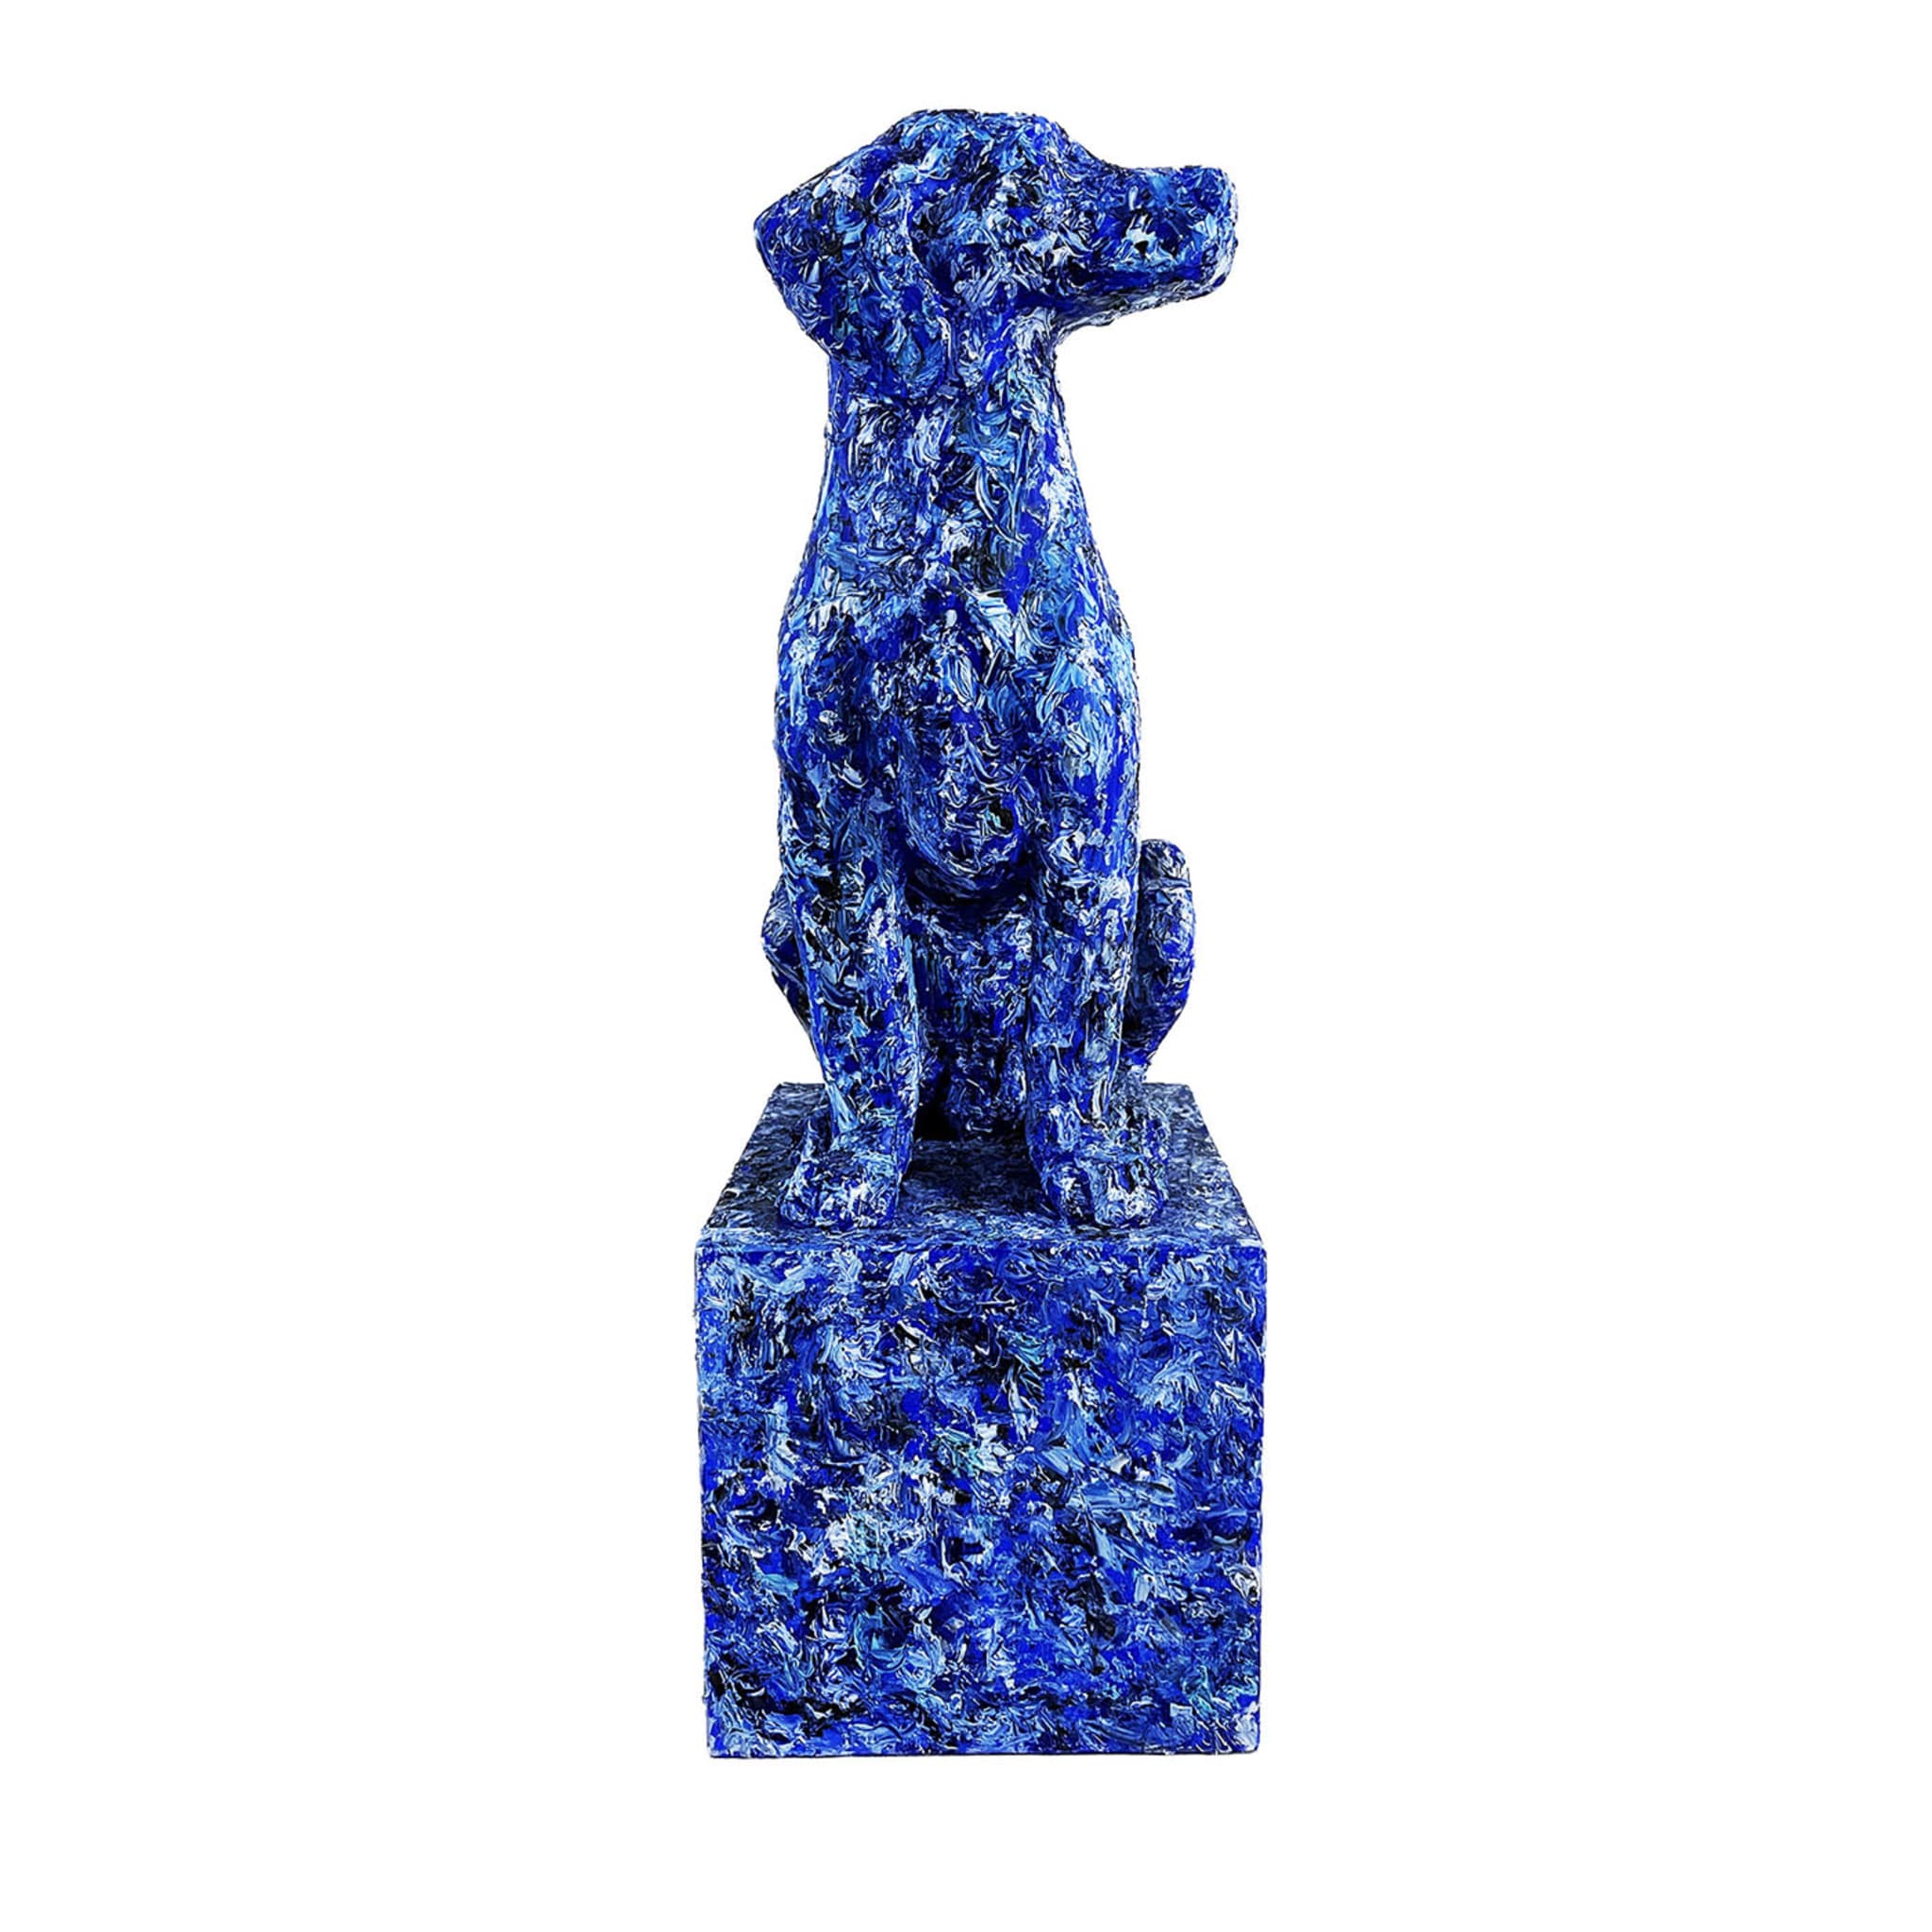 Escultura de perro azul - Vista principal